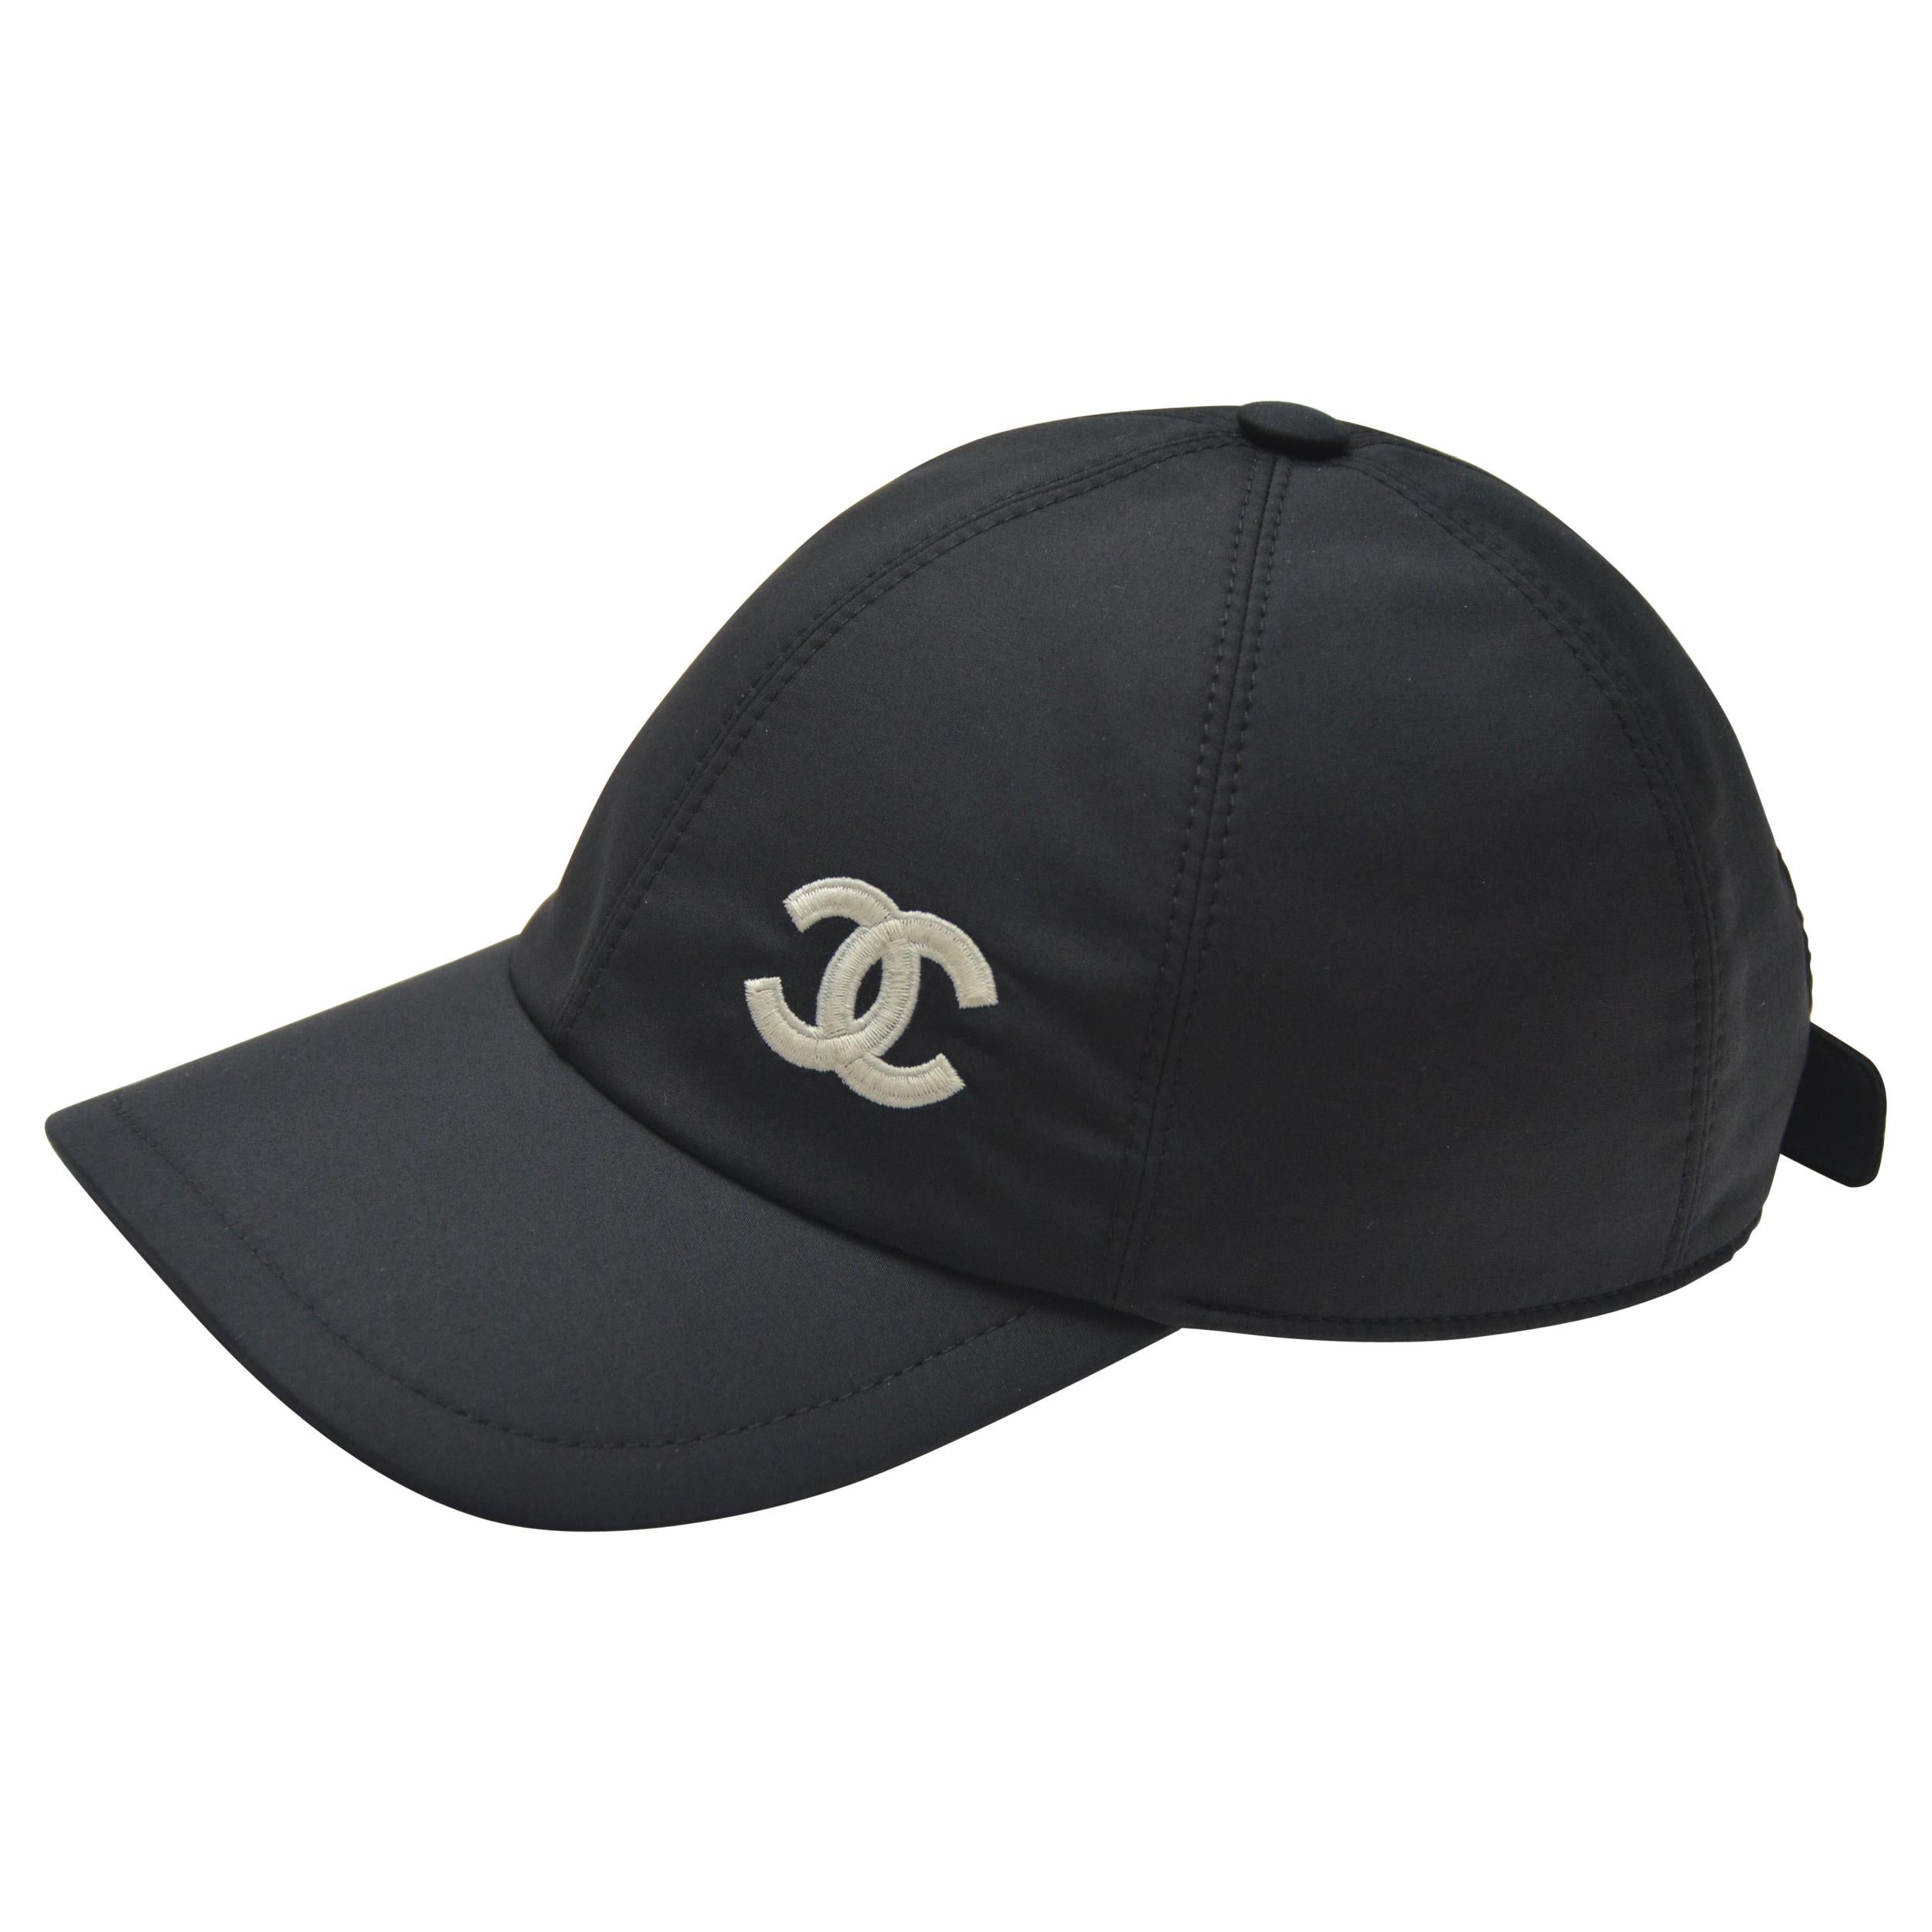 in stock Chanel fashion peaked cap baseball caps sun hats cap 404035   Lazadavn